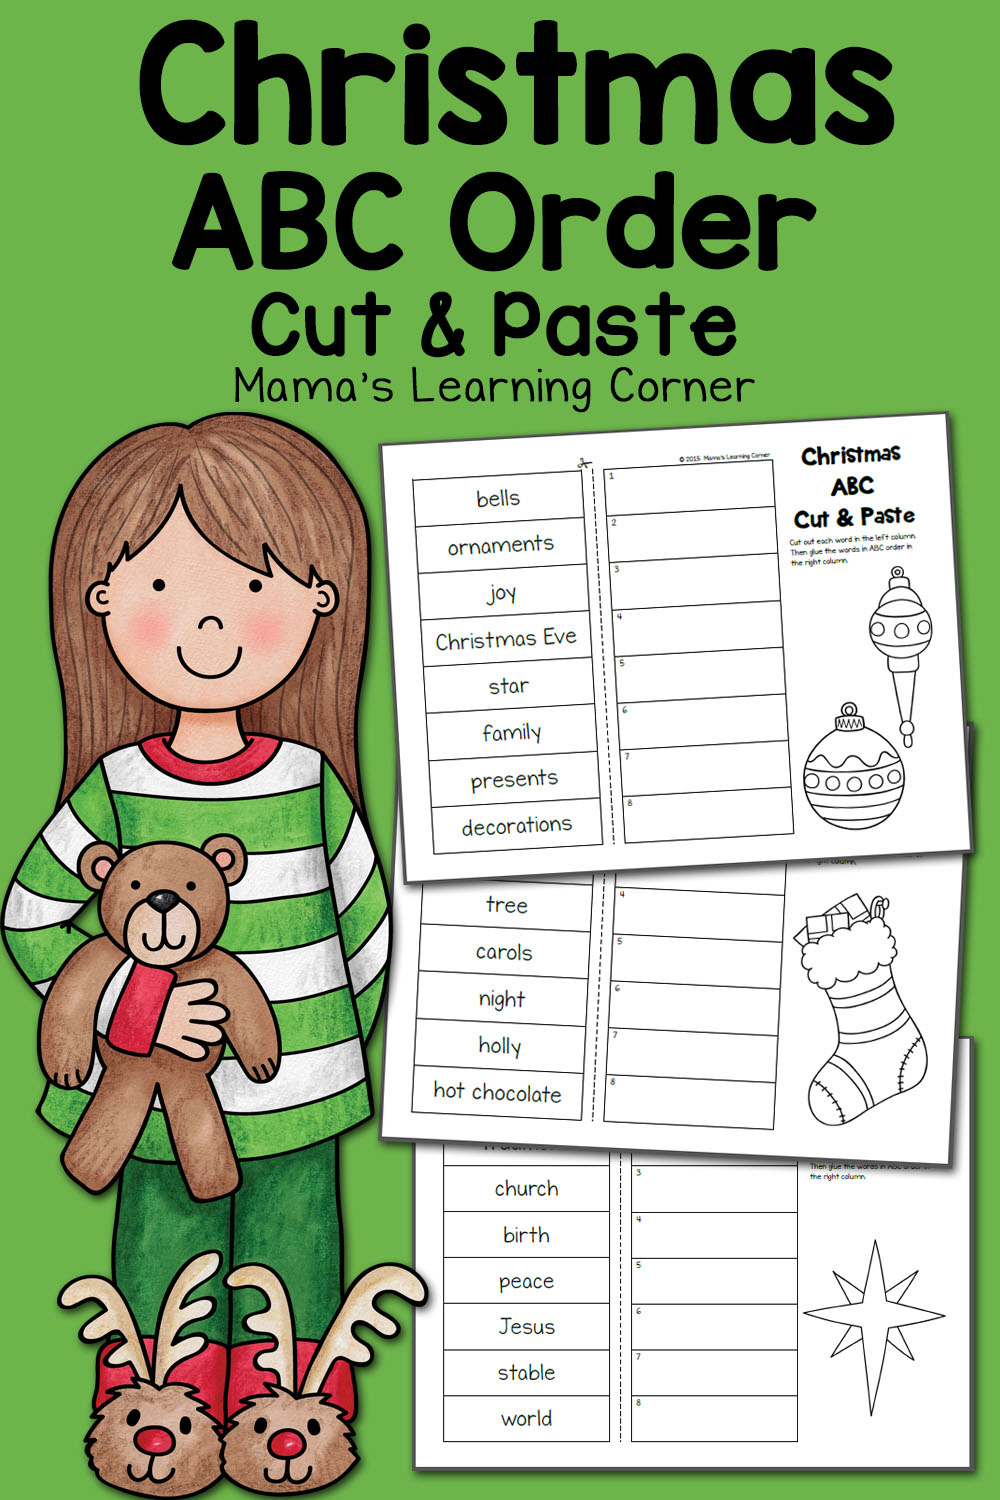 Christmas Abc Order Worksheets: Cut And Paste! - Mamas